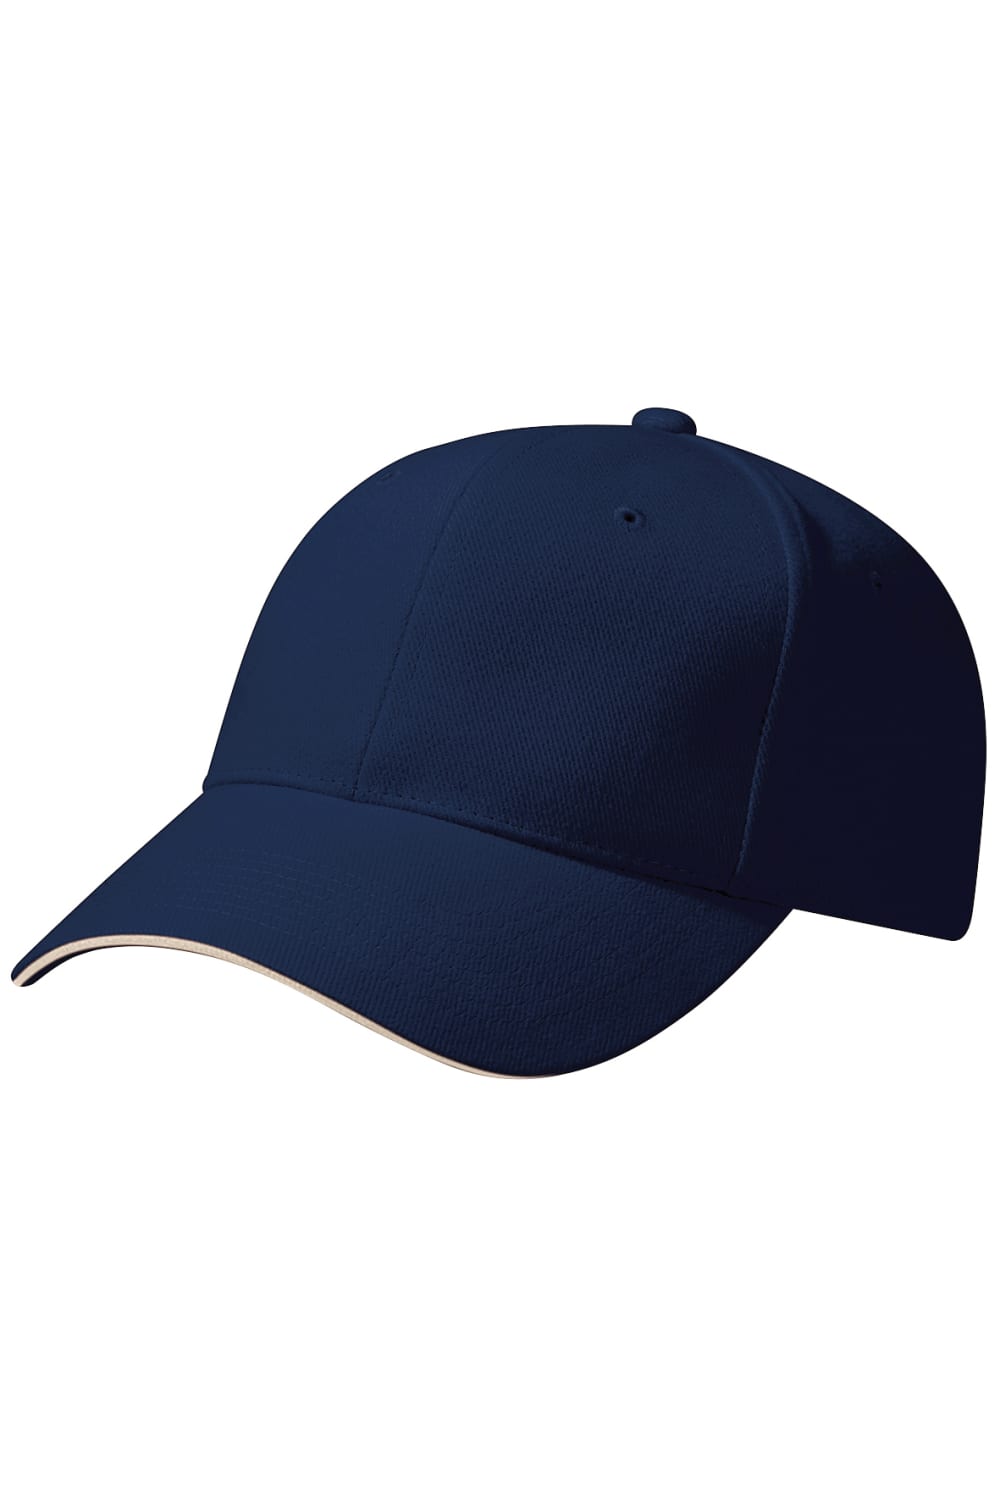 Unisex Pro-Style Heavy Brushed Cotton Baseball Cap/Headwear - French Navy/Stone